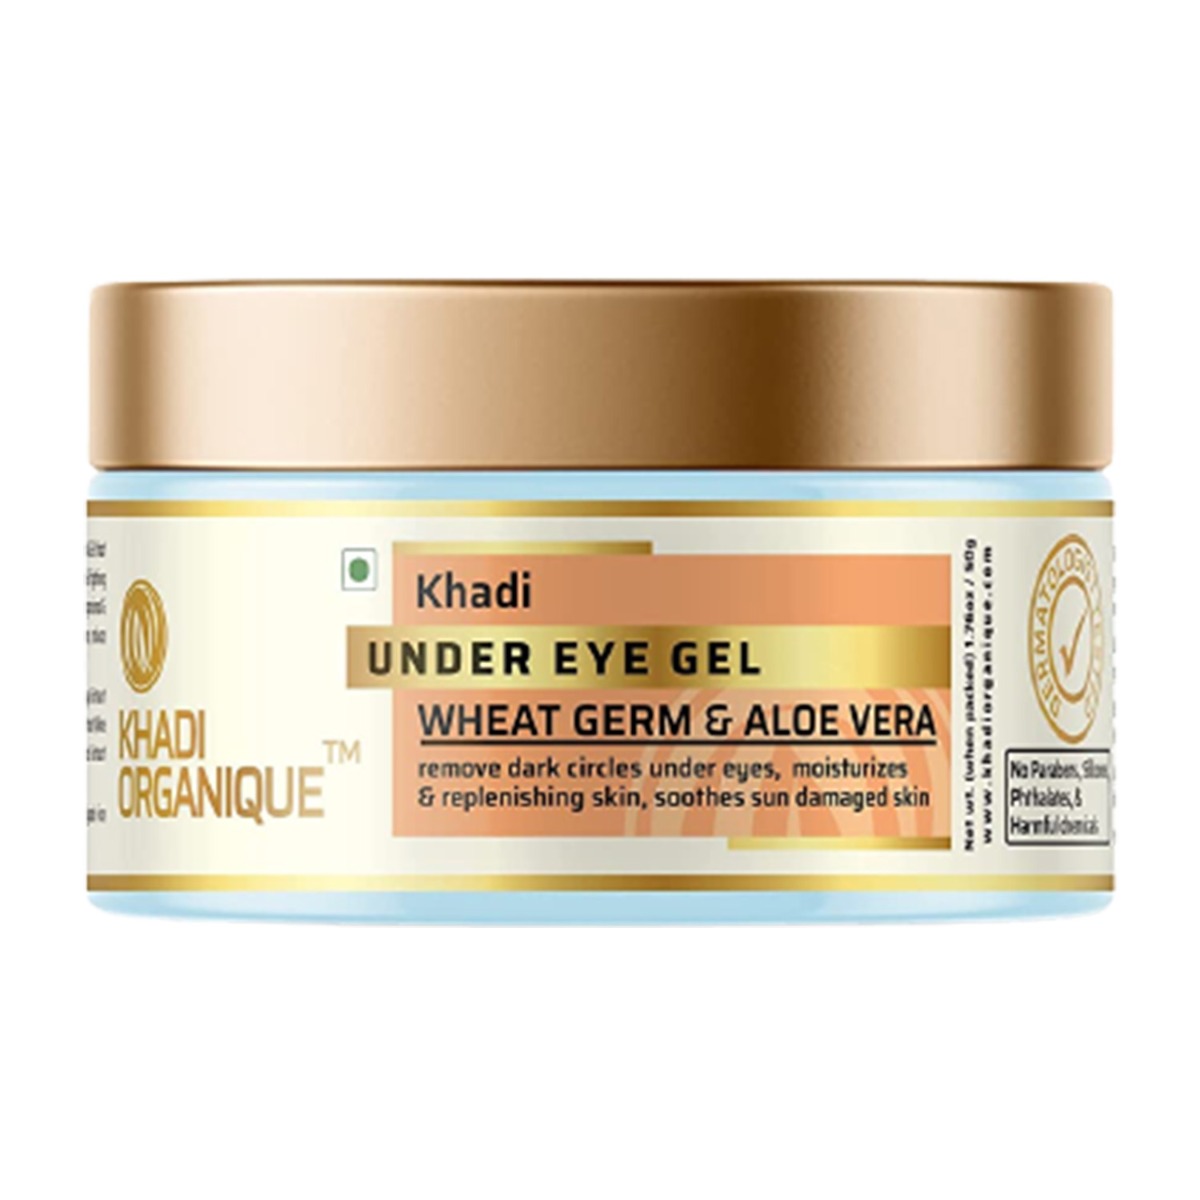 Khadi Organique Under Eye Gel Wheat Germ and Aloe Vera, 50gm